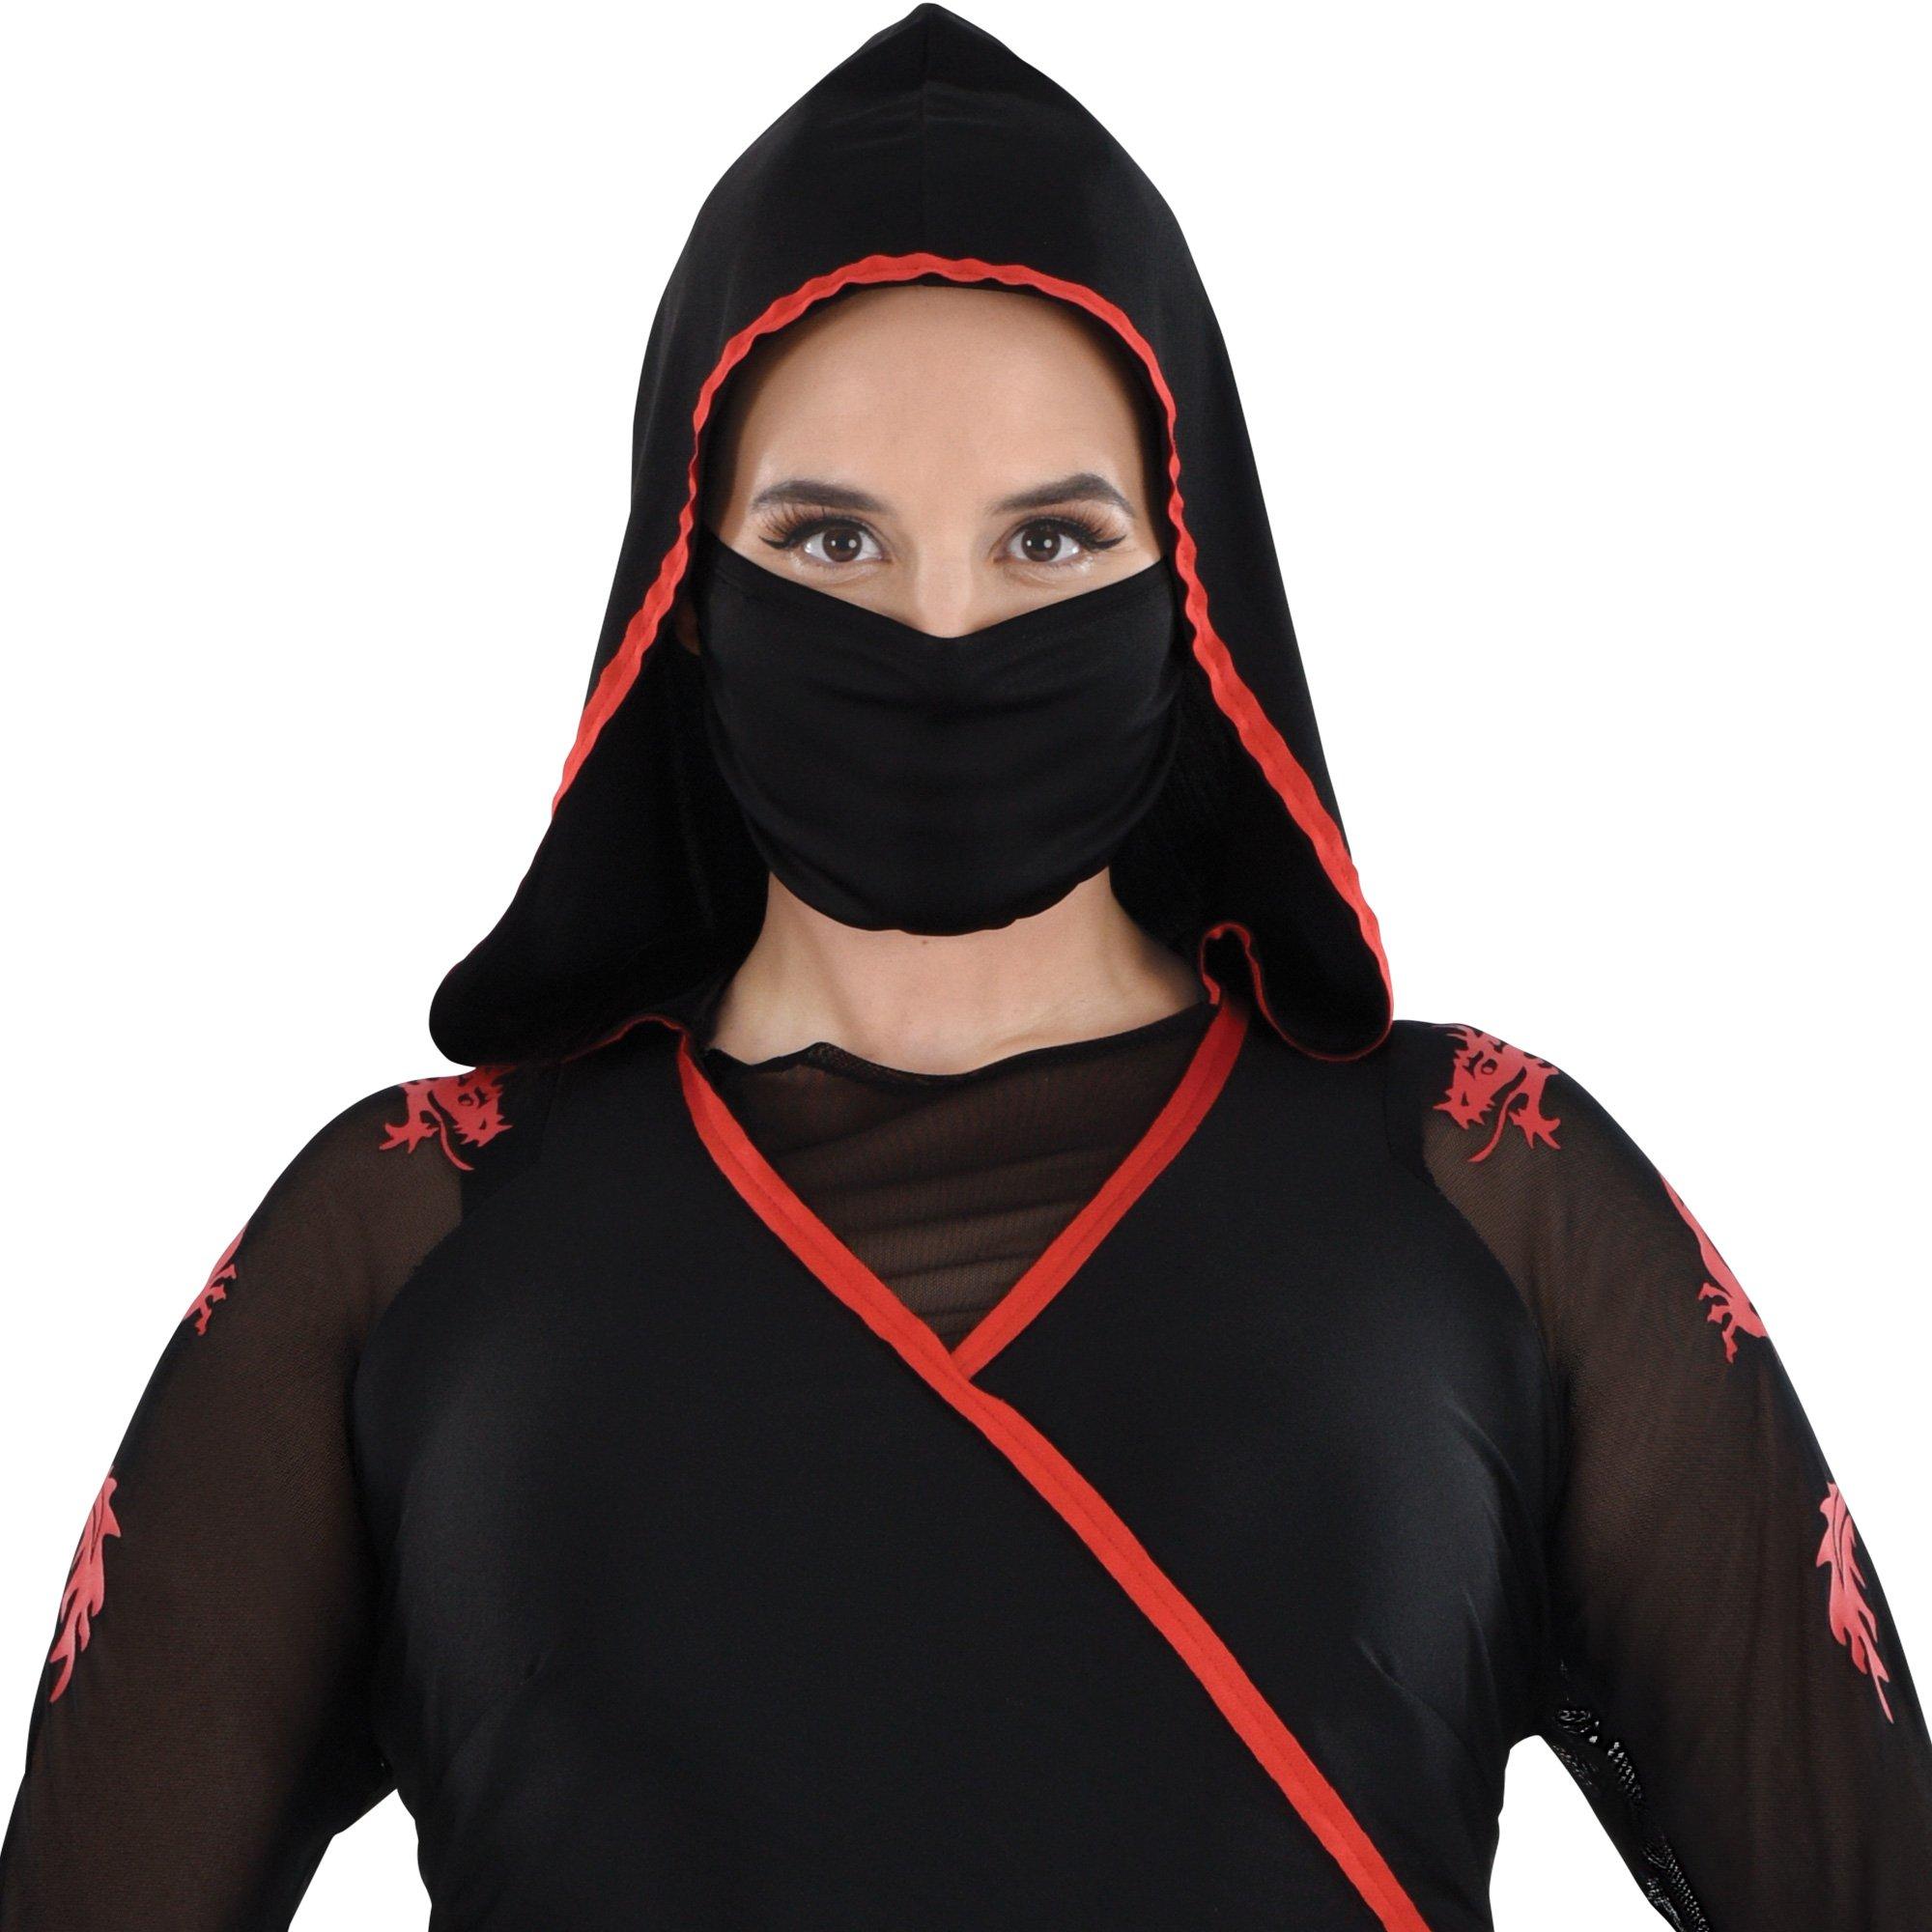 Women's Ninja Assassin Costume 